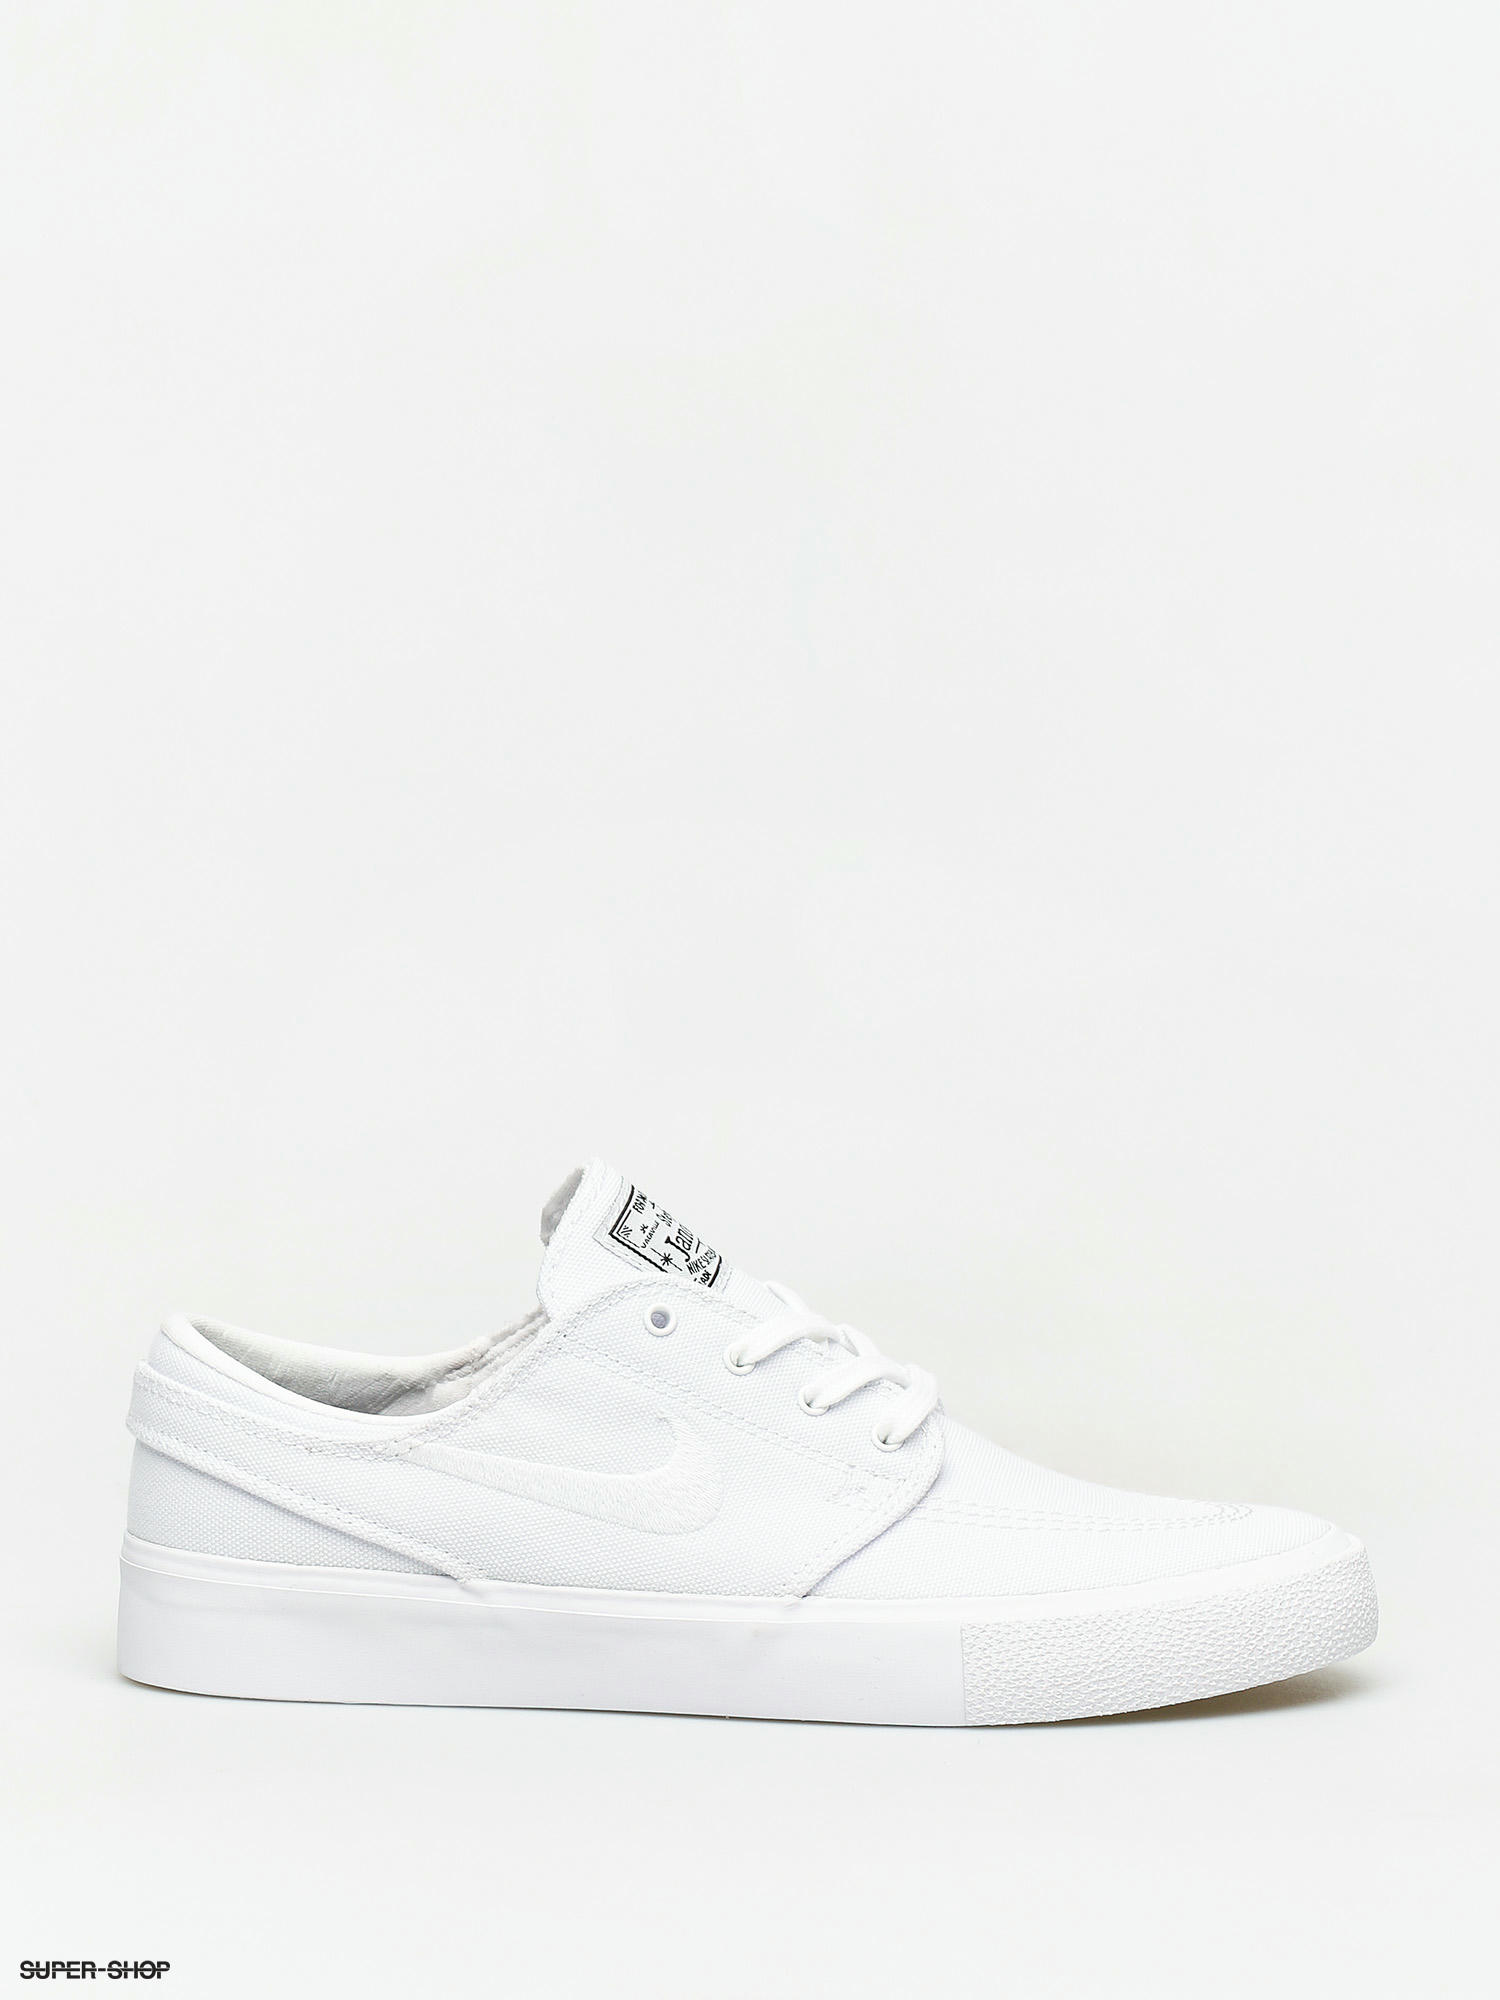 Nike Sb Zoom Janoski Canvas Rm Shoes White White Gum Light Brown Black